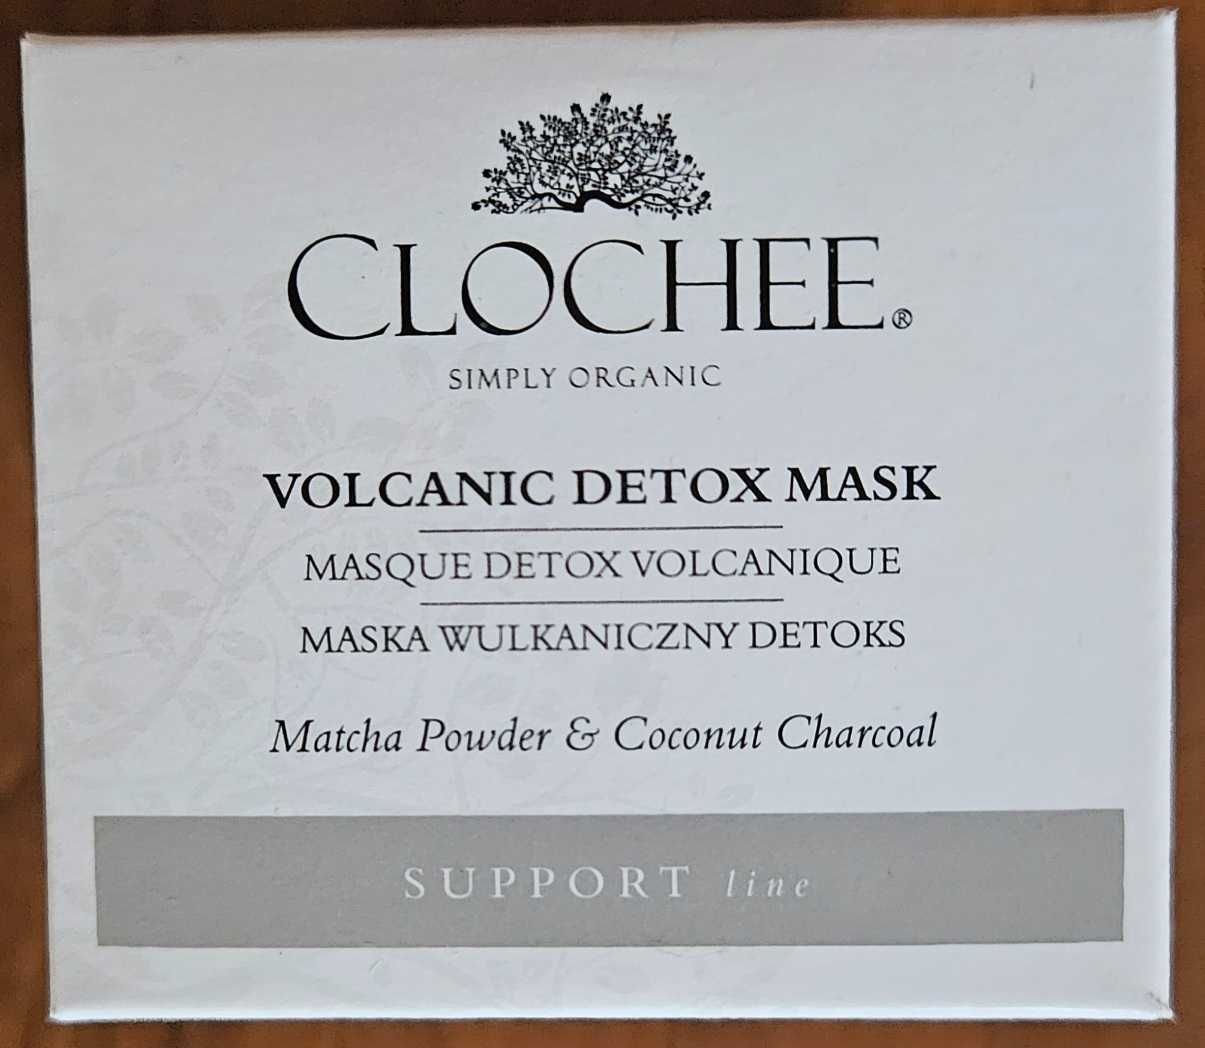 CLOCHEE maska wulkaniczna Detox Mask matcha powder